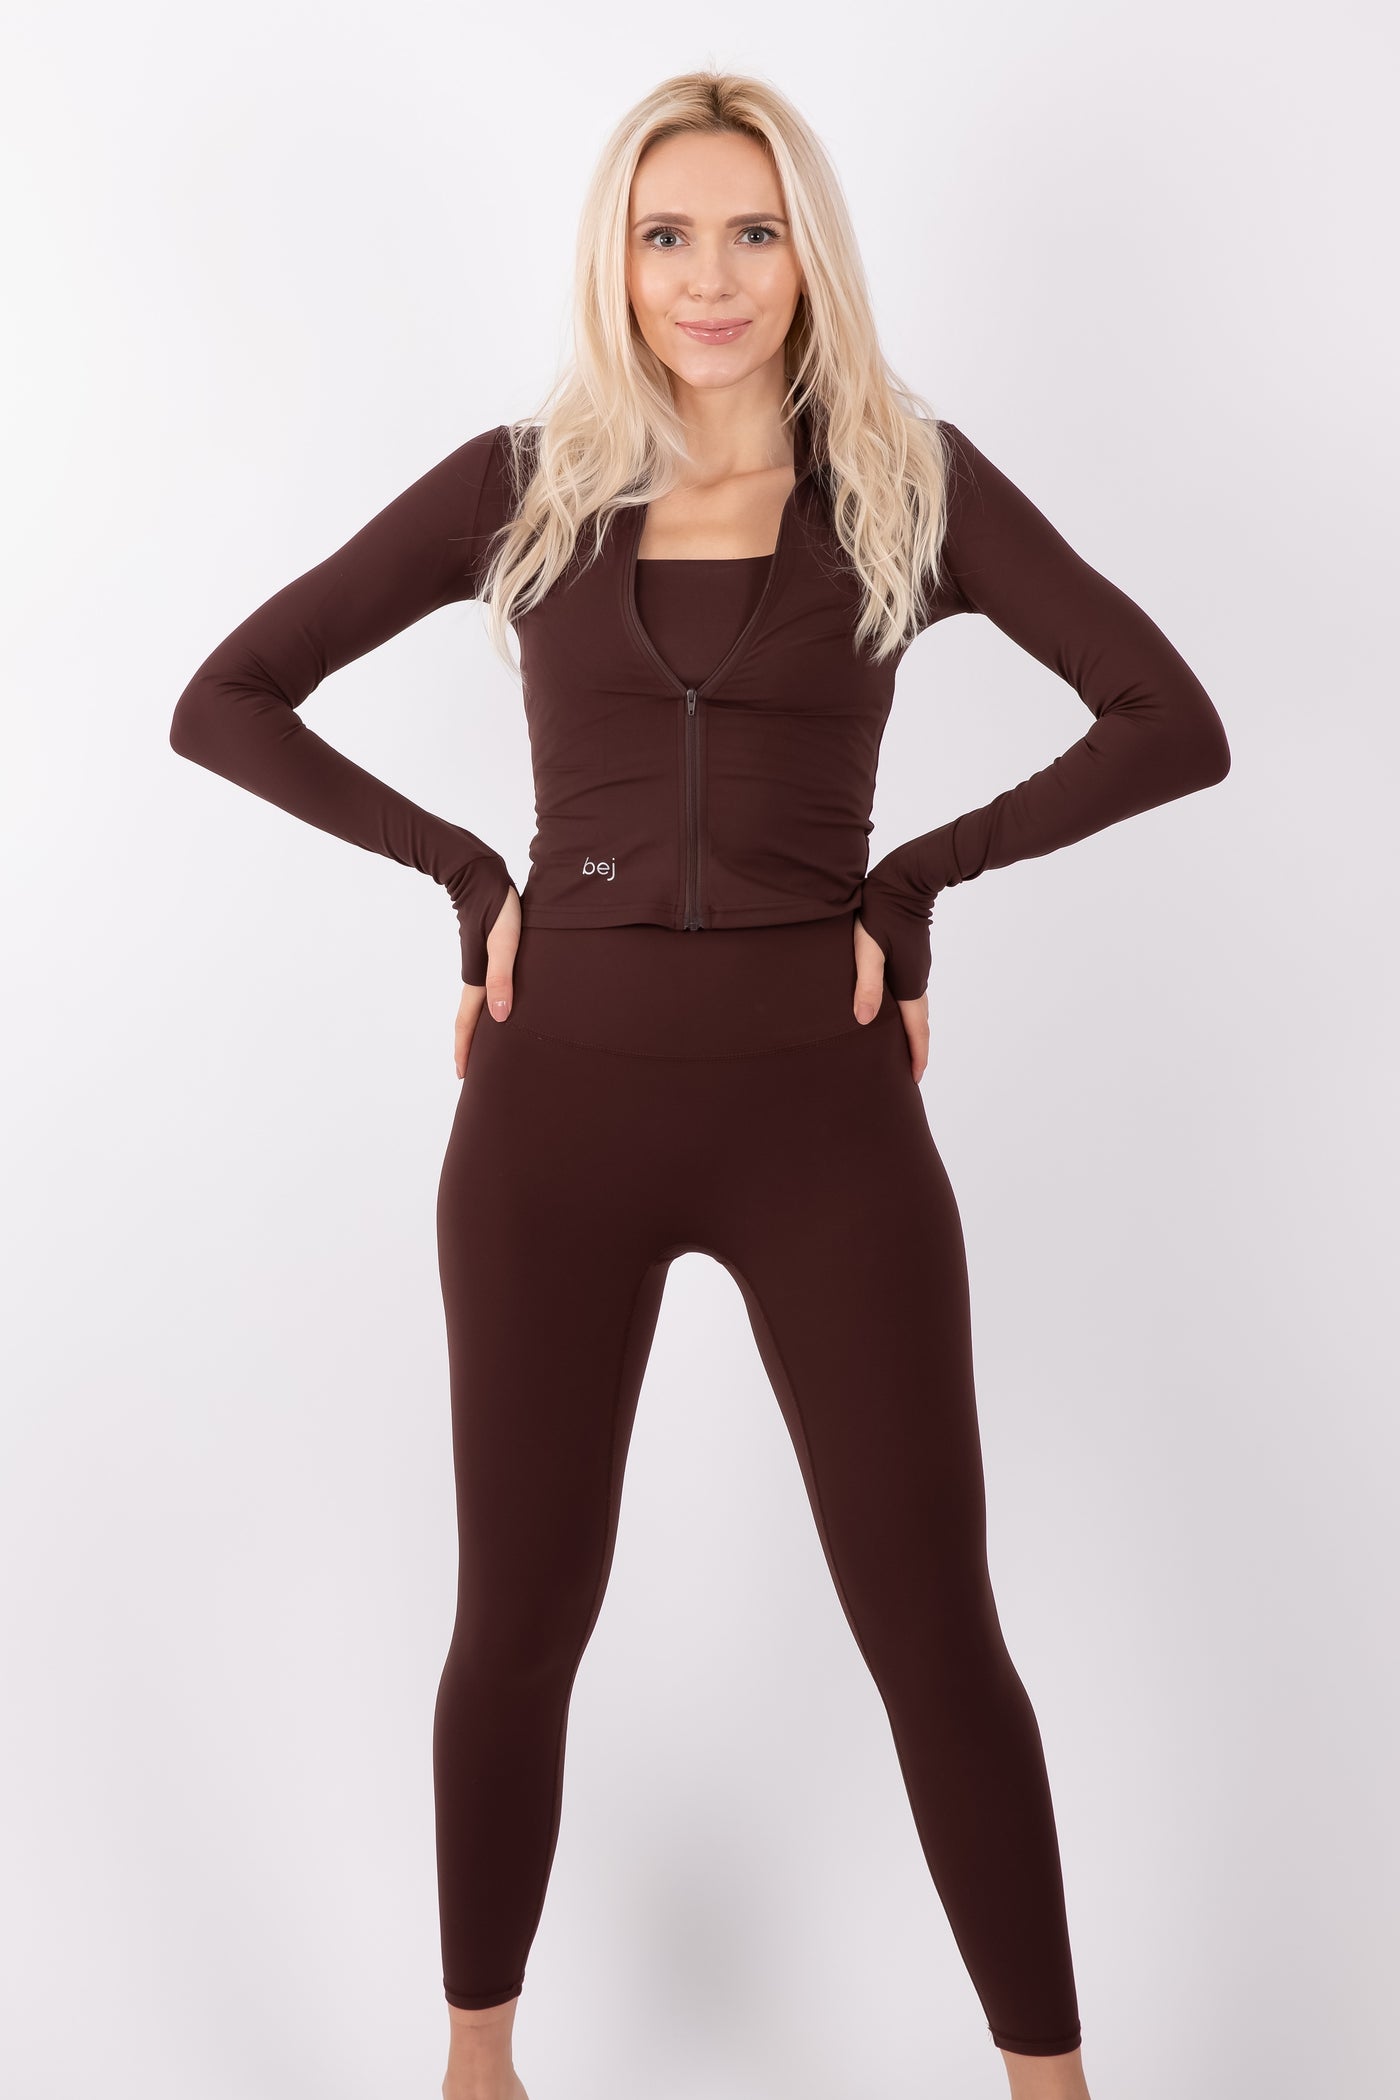 Made to Move Brown Legging - Shop women's workout apparel online | Leggings, hoodies, Top & bras | bejactive